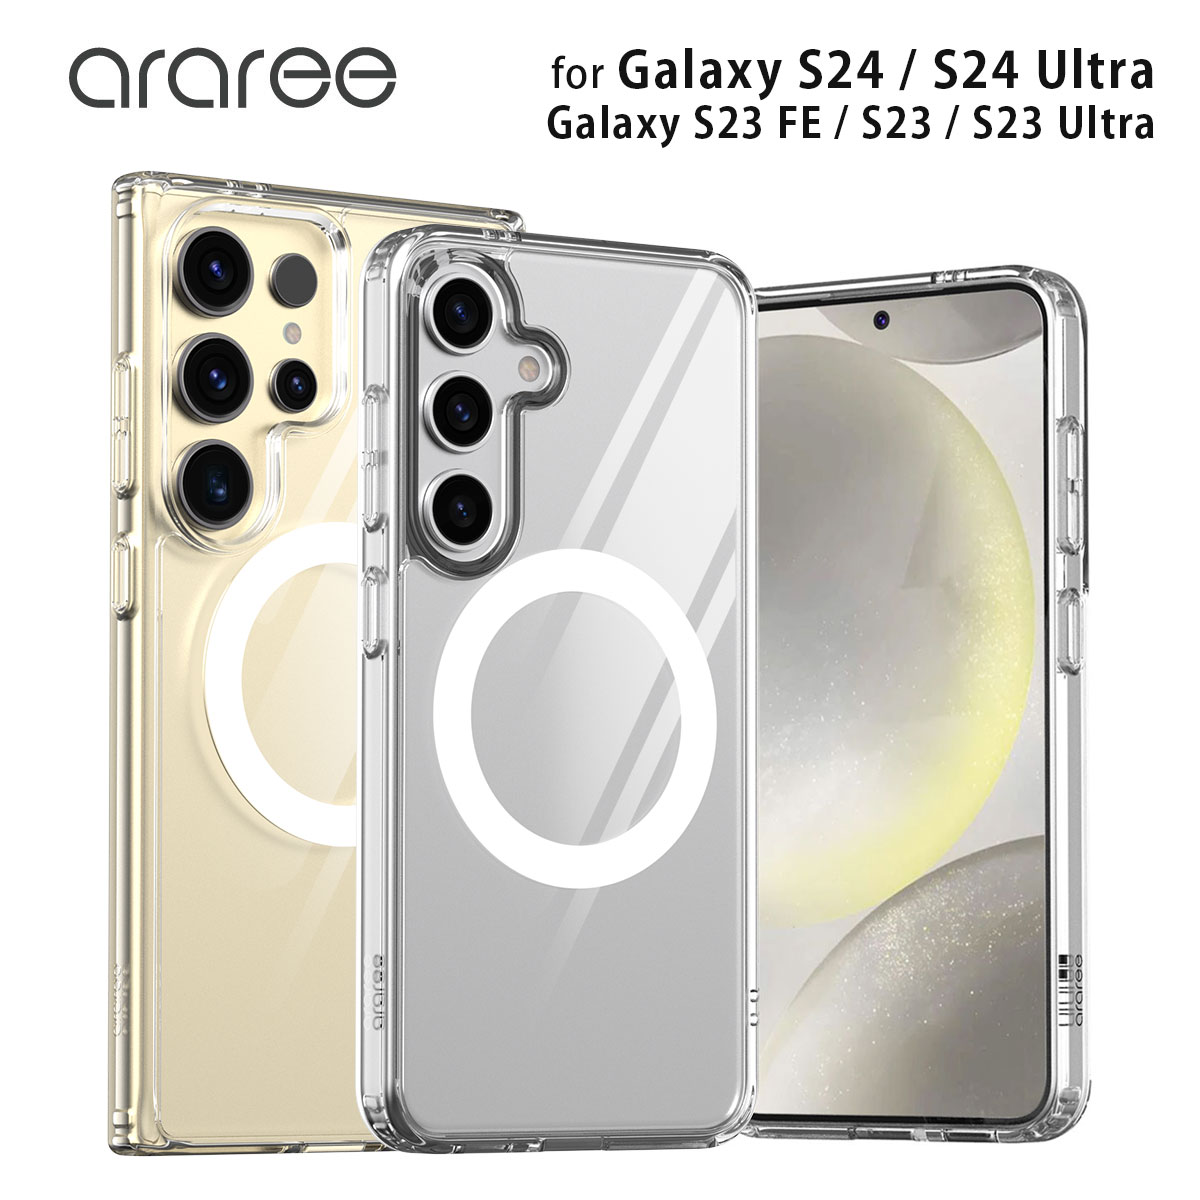 Galaxy S24 / S24 Ultra / S23 FE / S23 / S23 Ultra 透明カバー araree Duple M クリアケース 背面カバー バックカバー ヂュープル 透明 SCG25 SC-51E